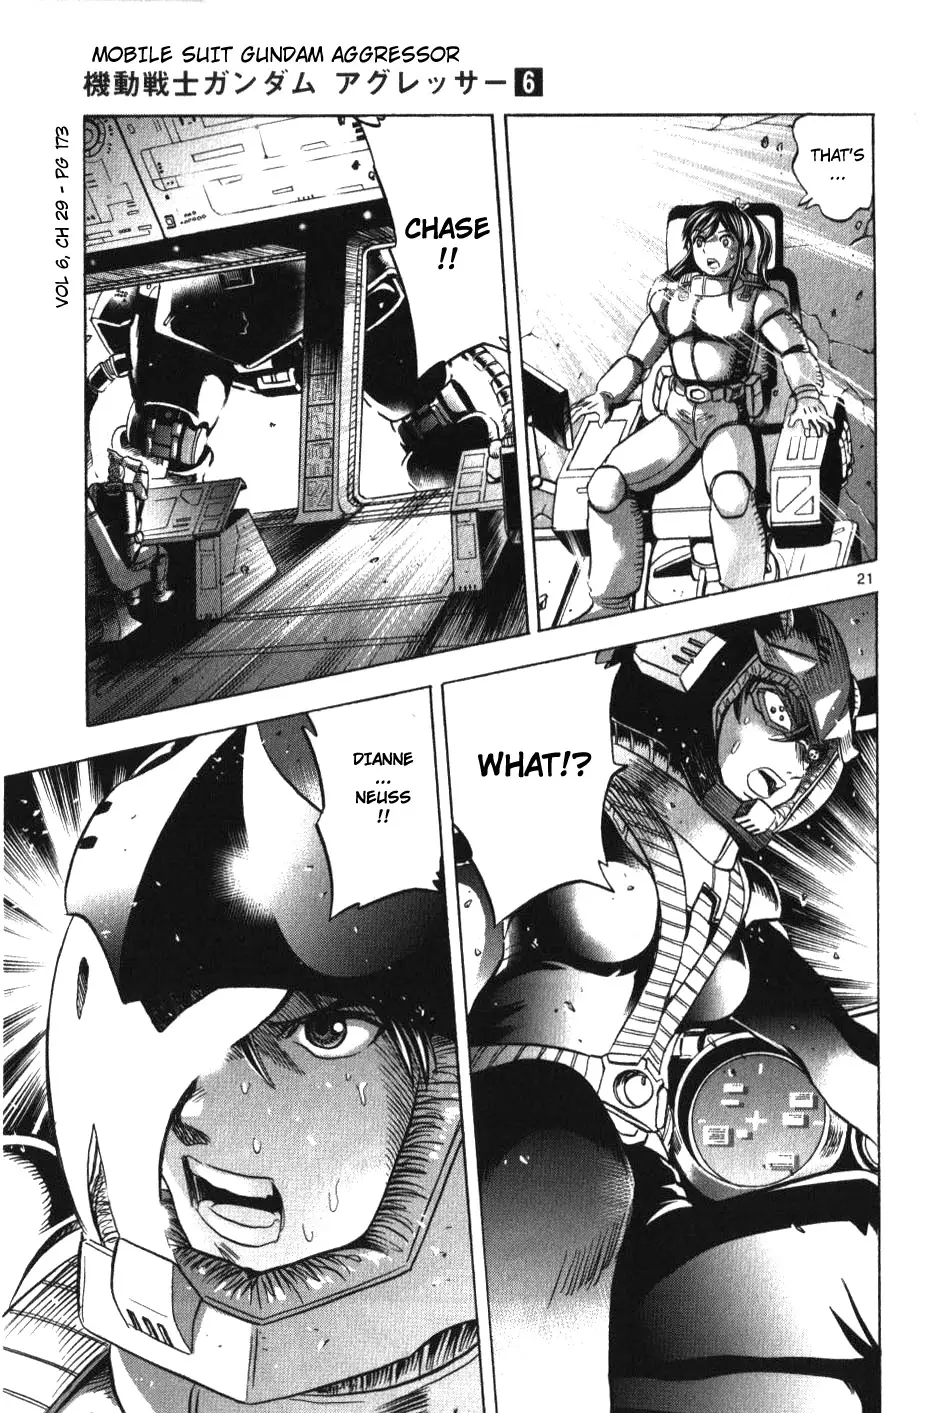 Mobile Suit Gundam Aggressor - 29 page 20-1850ed39